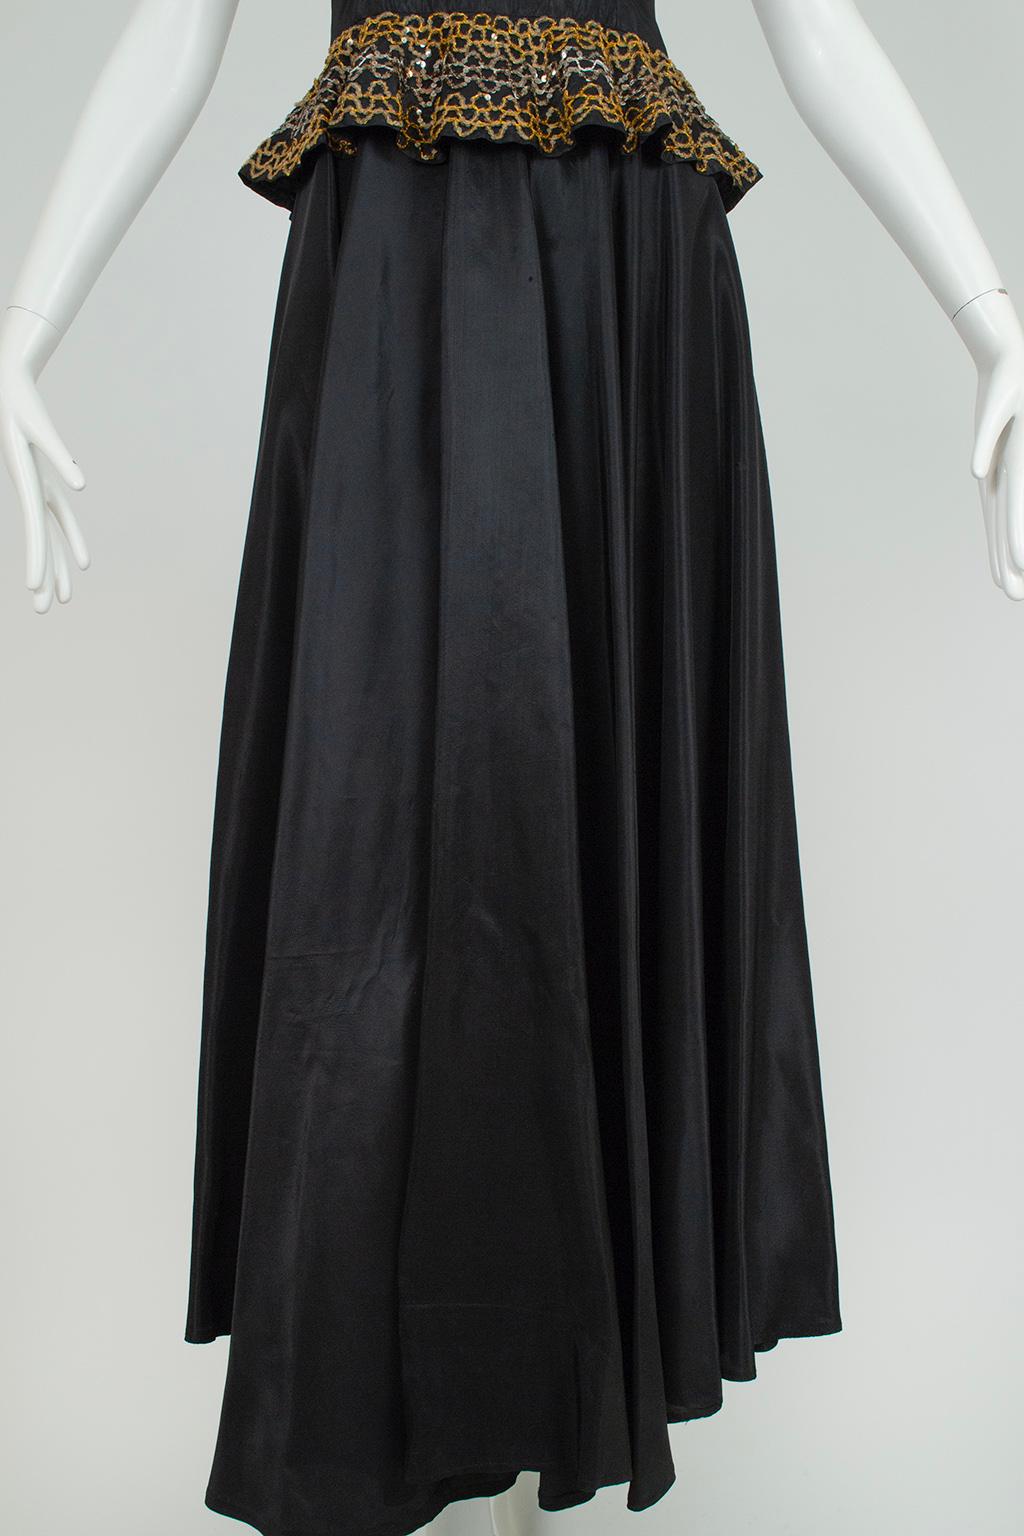 Black Taffeta Off-Shoulder Flamenco Gown with Sequin Peplum - XXS, 1940s For Sale 5